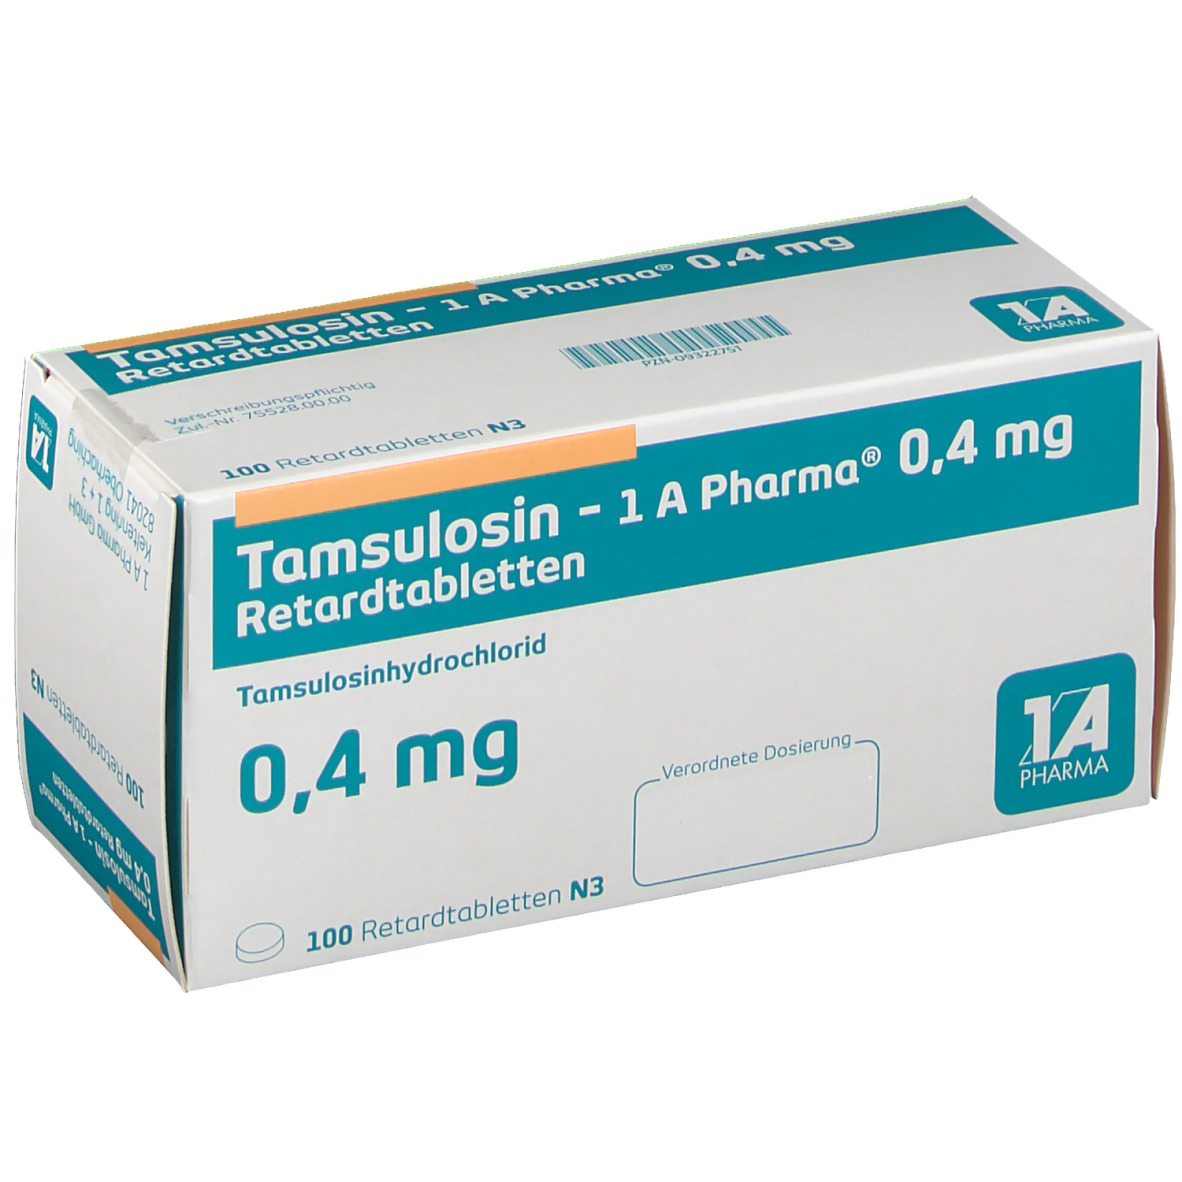 Tamsulosin - 1A Pharma® 0,4 mg 100 St - shop-apotheke.com